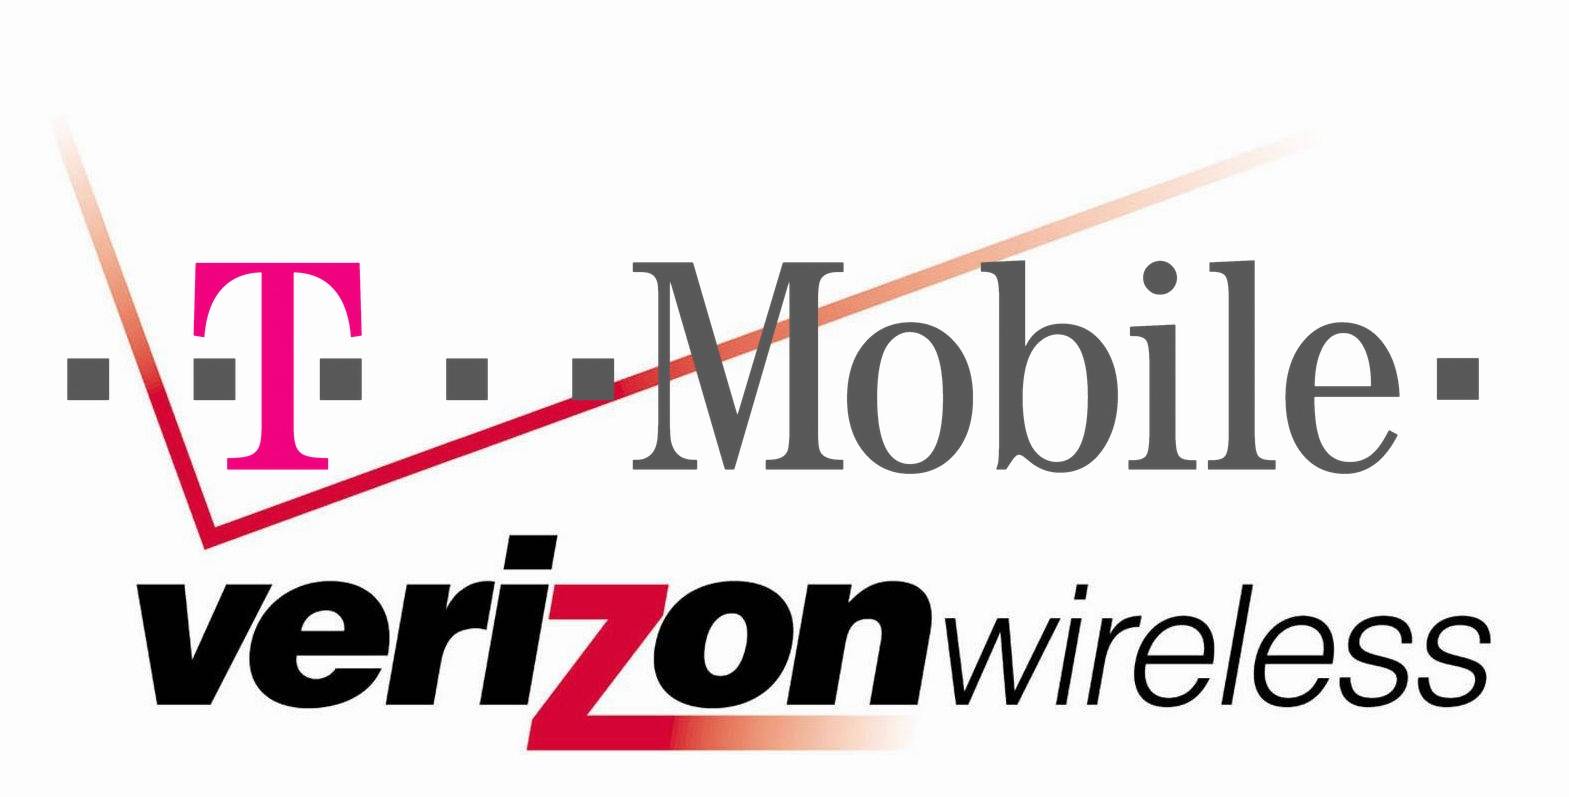 T me verizon swaps. T mobile. Verizon. Cable & Wireless лого. Verizon Wireless z800.